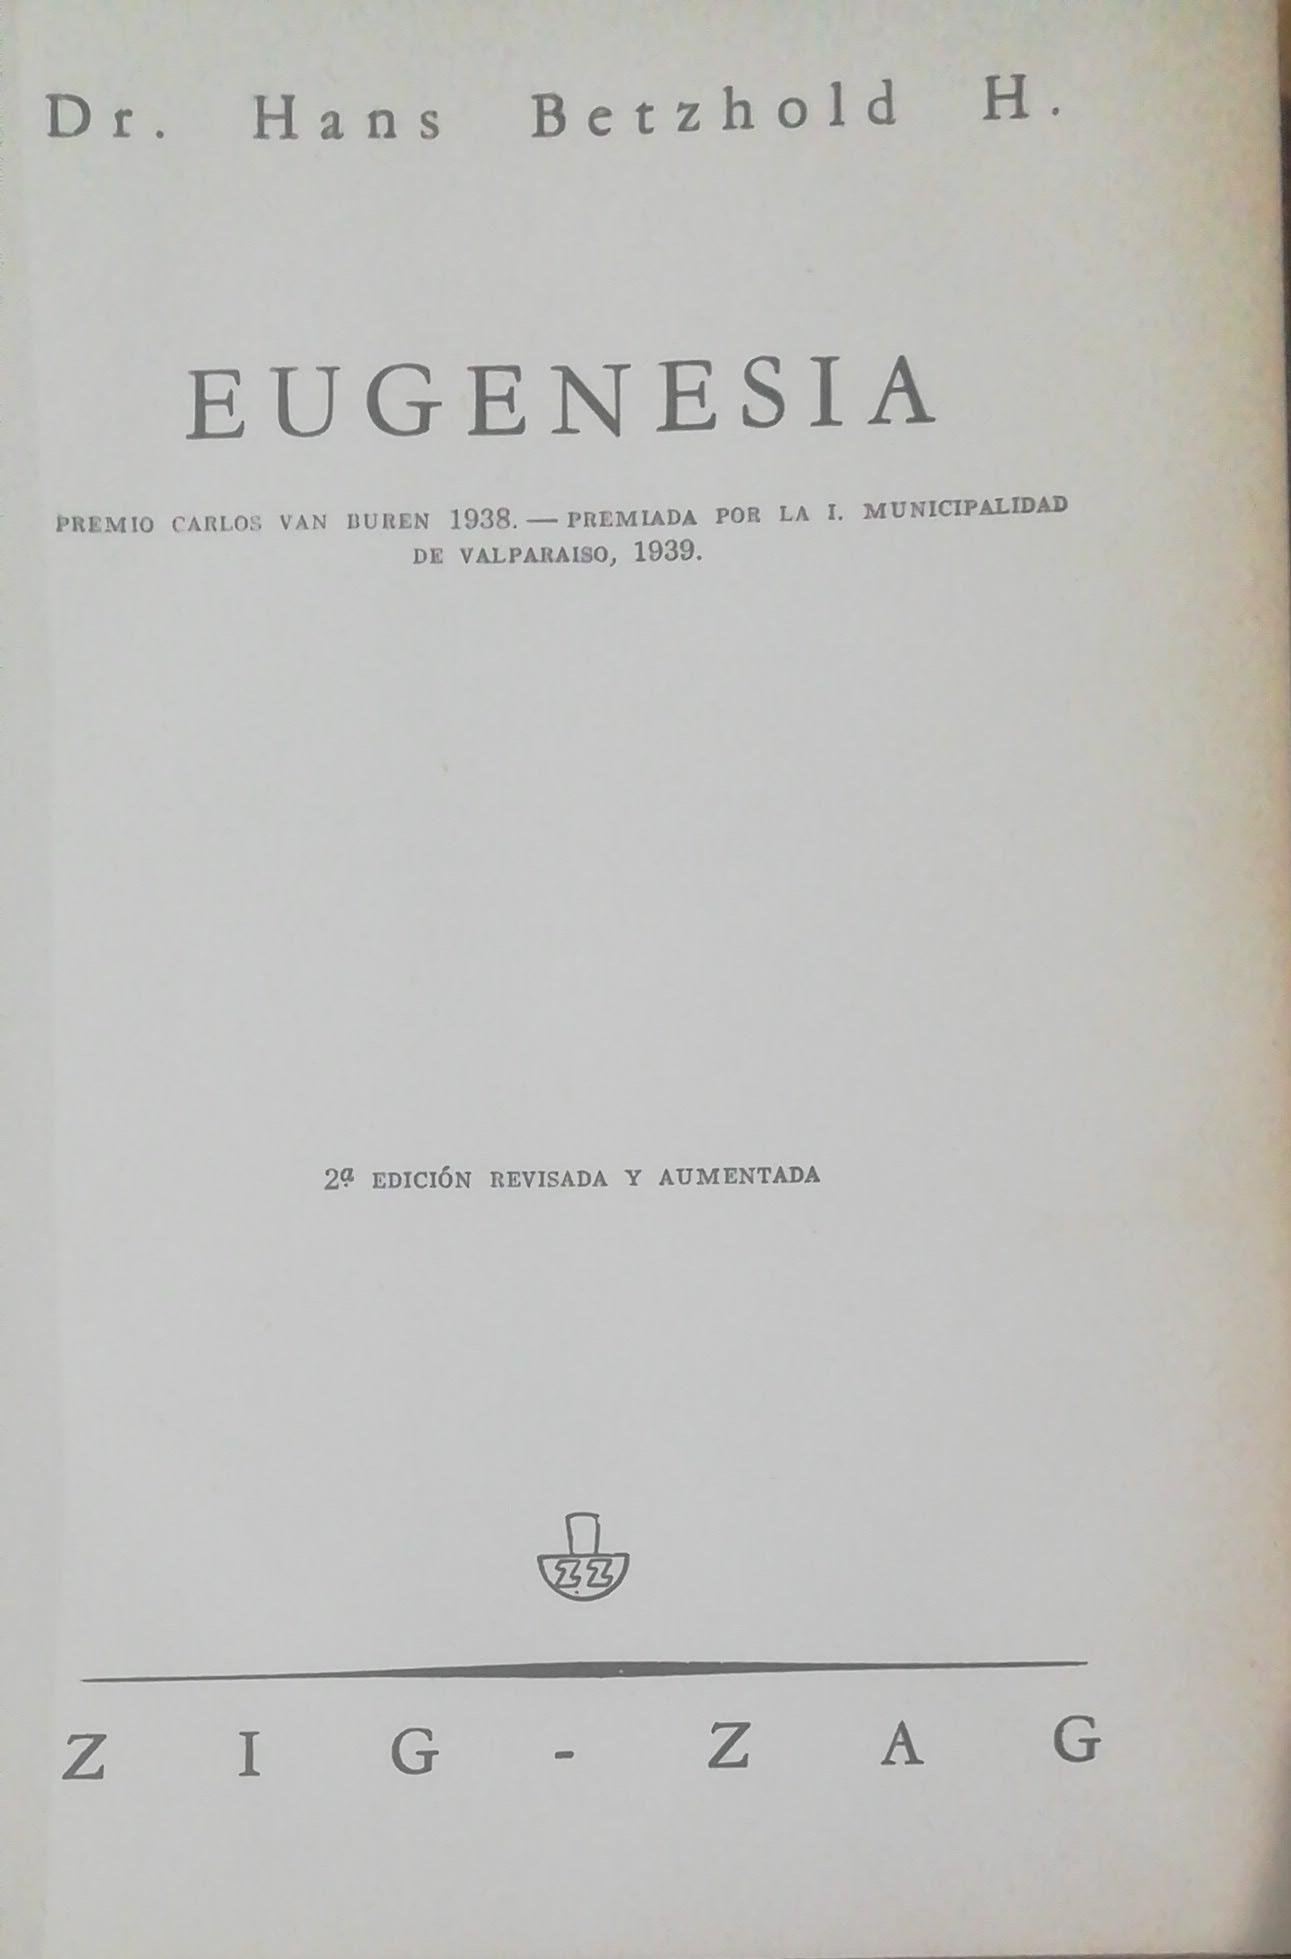 Eugenesia